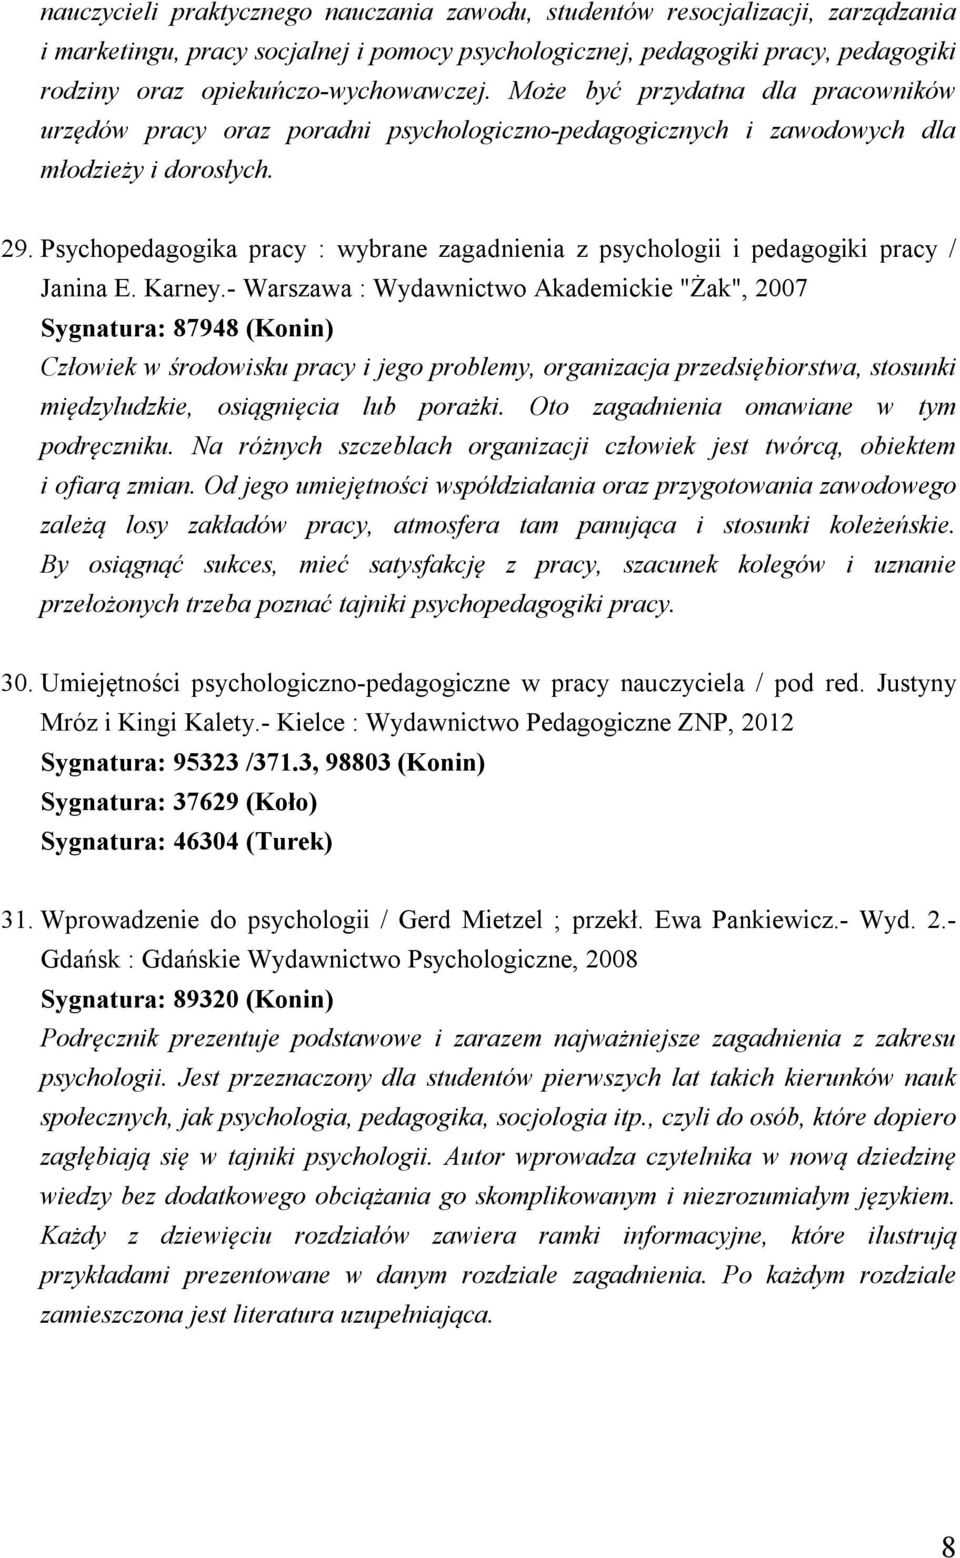 Psychopedagogika pracy : wybrane zagadnienia z psychologii i pedagogiki pracy / Janina E. Karney.